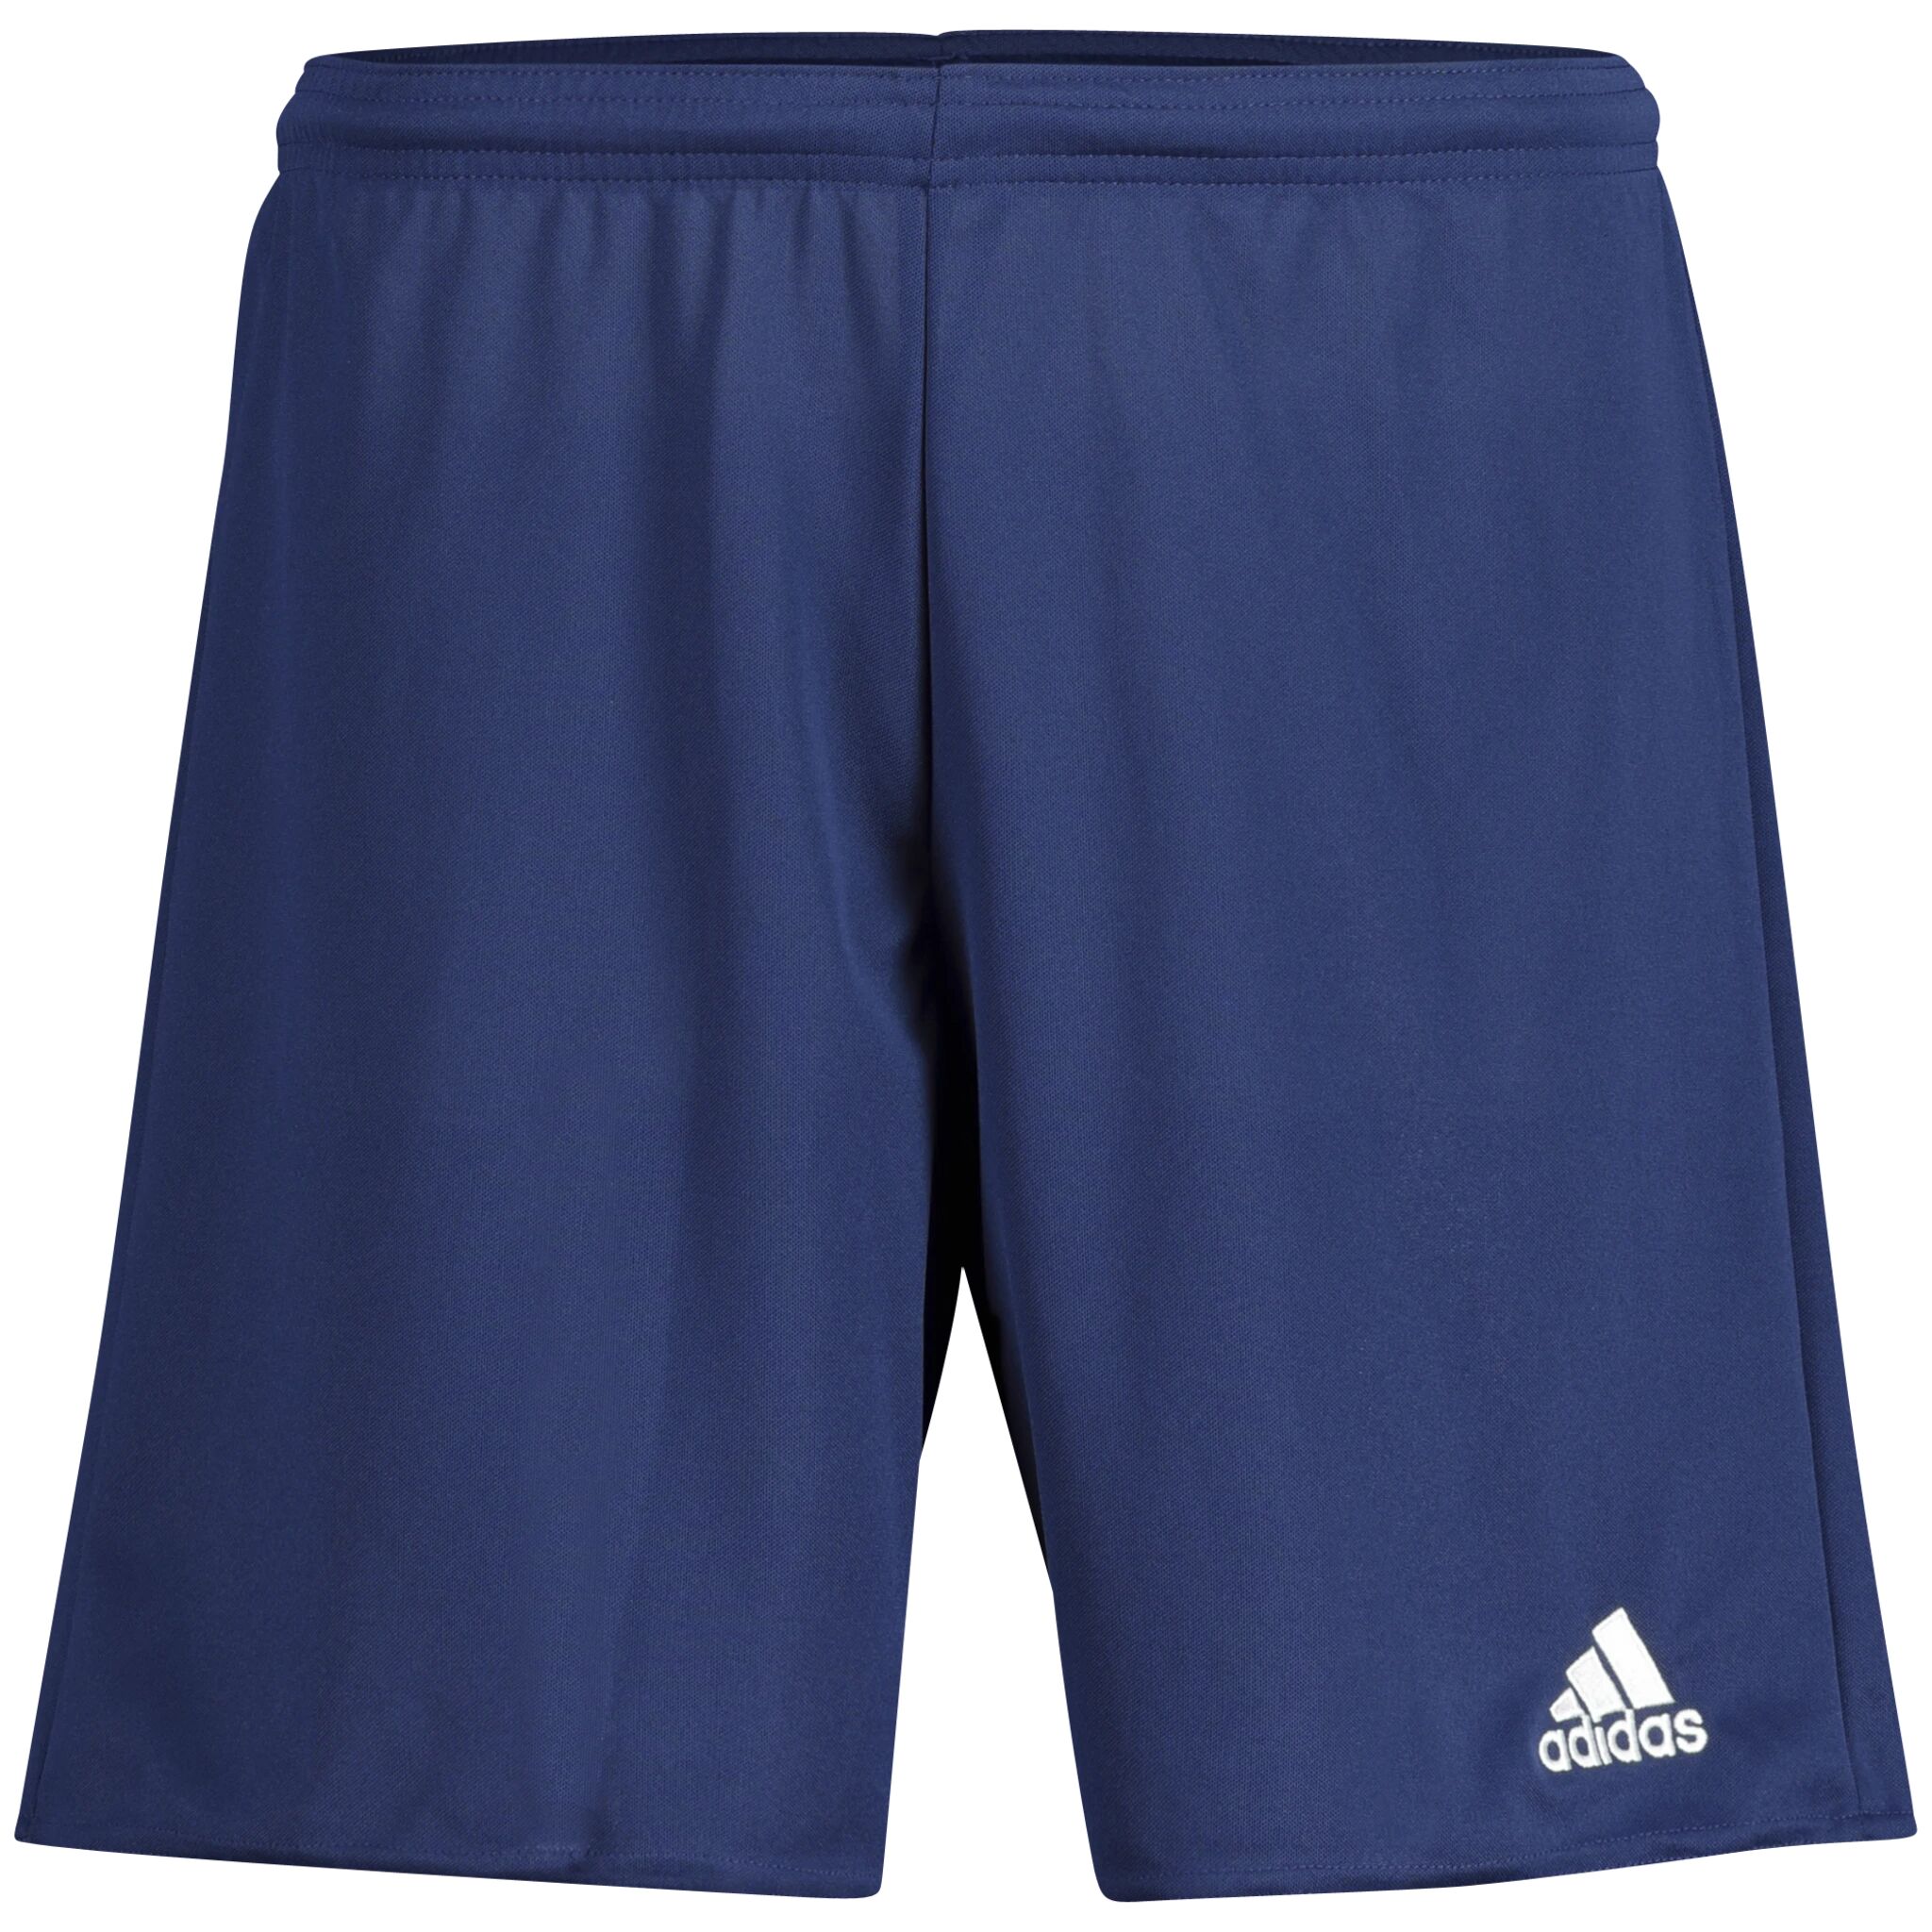 adidas Parma 16 shorts, treningsshorts junior 116 DKBLUE/WHITE